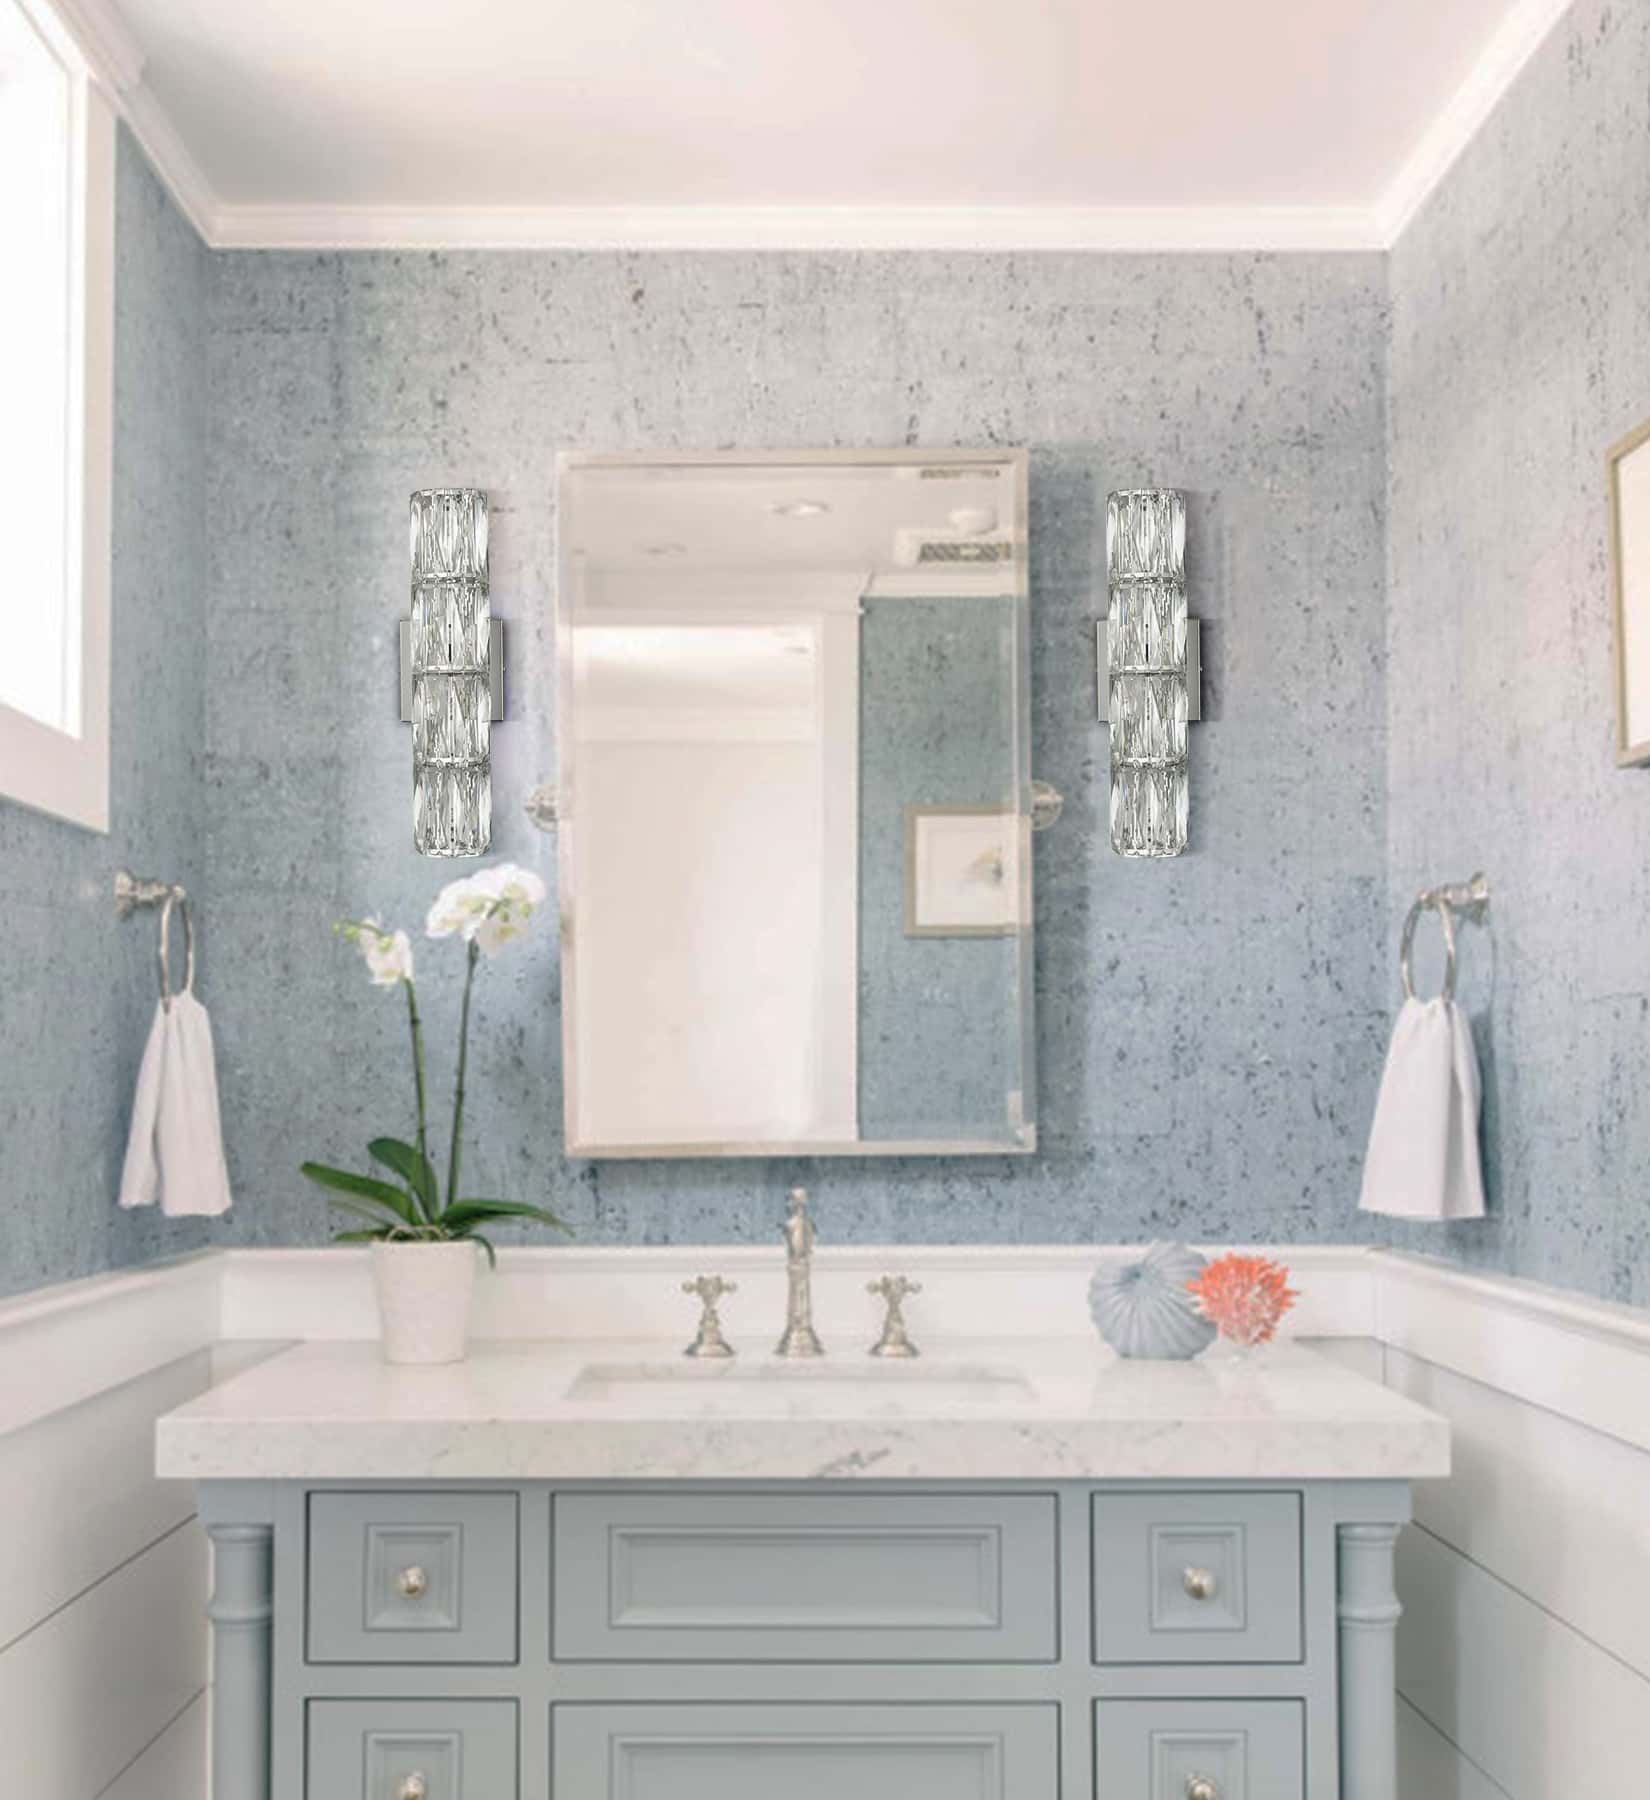 Chrome Crystal Wall Sconce Modern 4-Light Bathroom Vanity Light Fixture